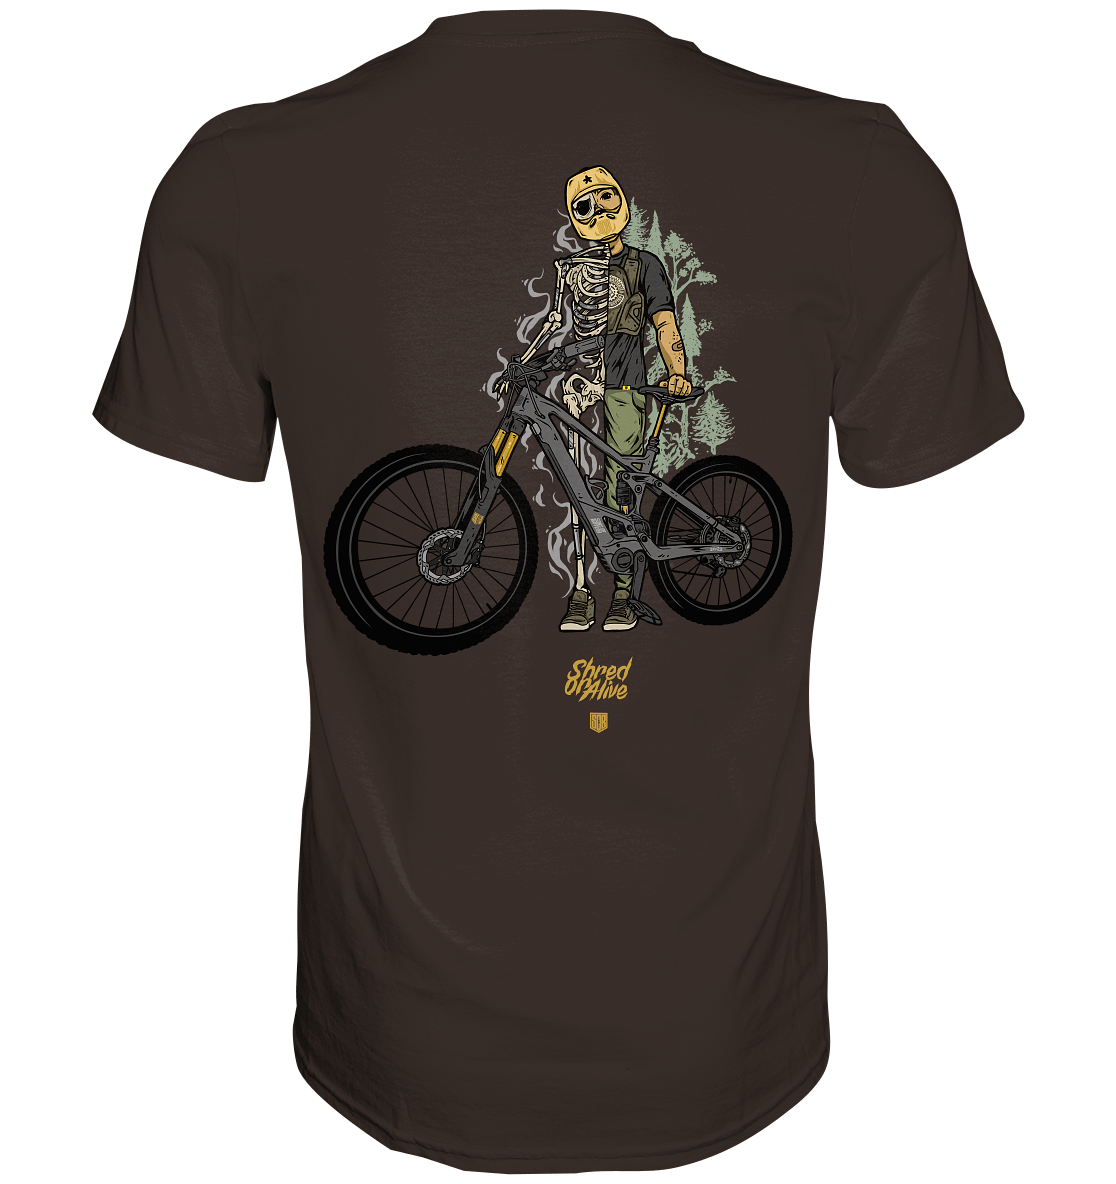 Sons of Battery® - E-MTB Brand & Community Unisex-Shirts SoB - Shred or Alive - Premium Shirt E-Bike-Community